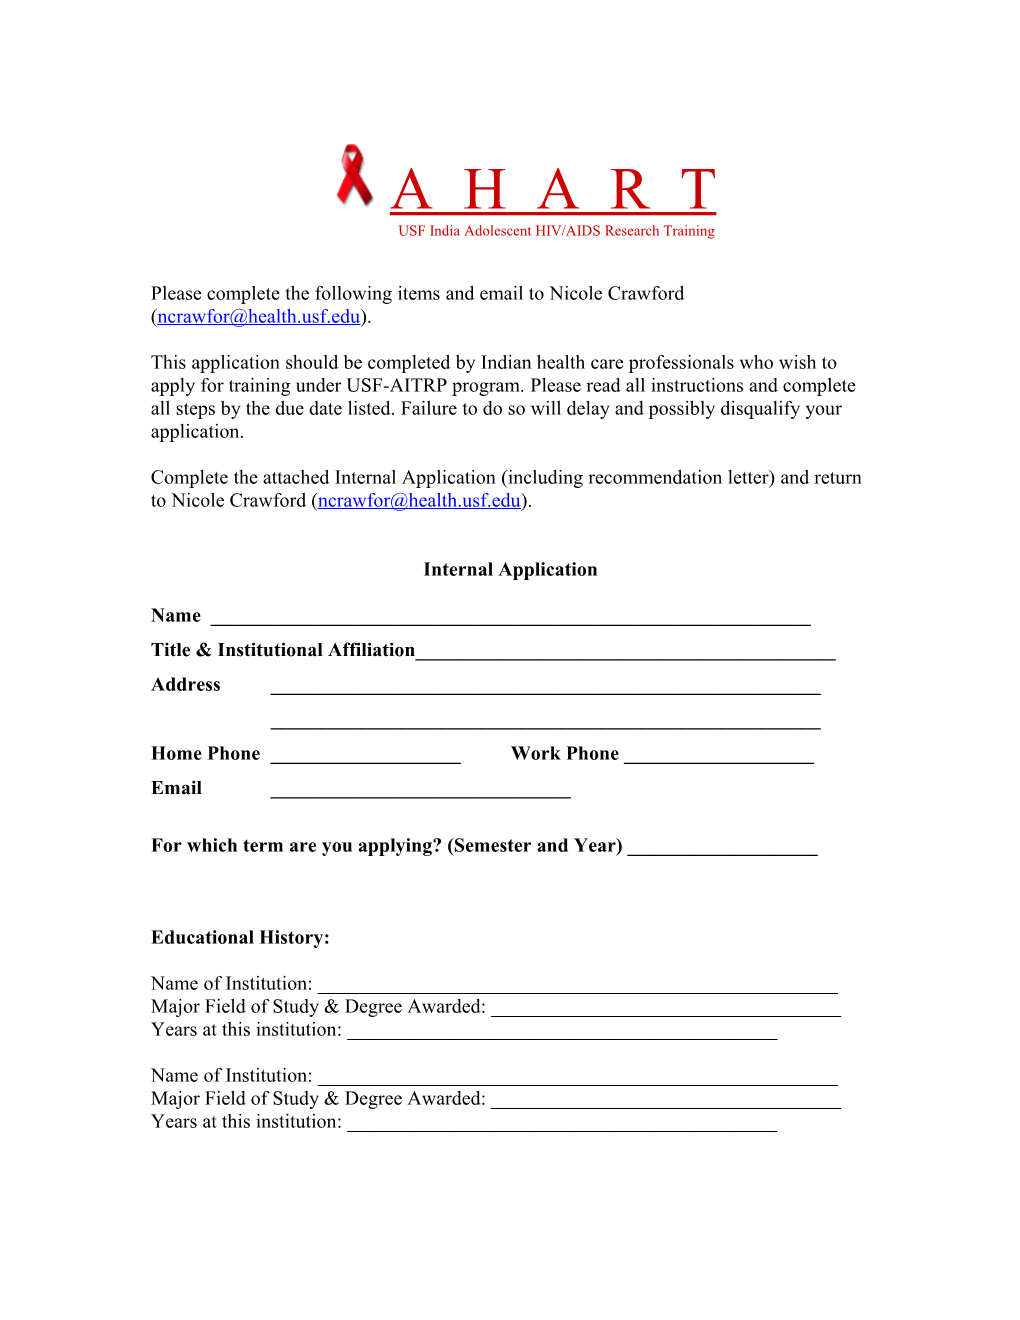 AITRP Application for Intermediate Training